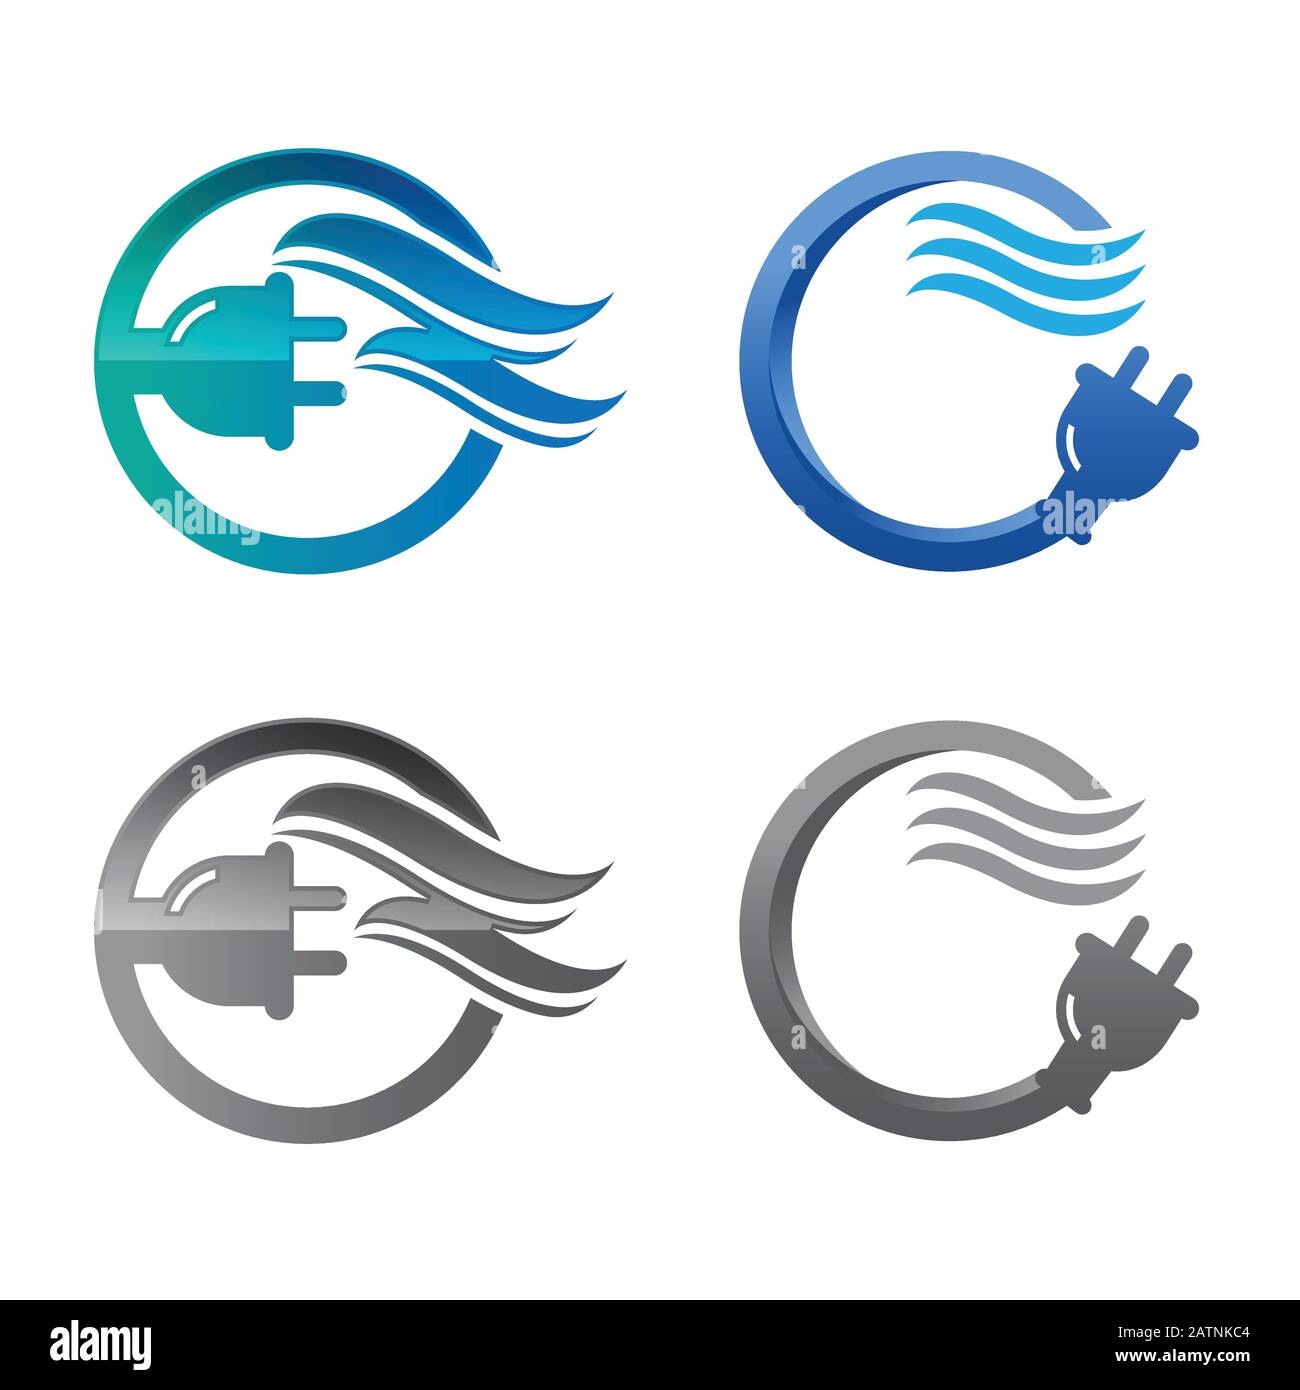 Electronic technology - vector logo concept illustration. Lightning logo. Electricity power logo. Stock Vector